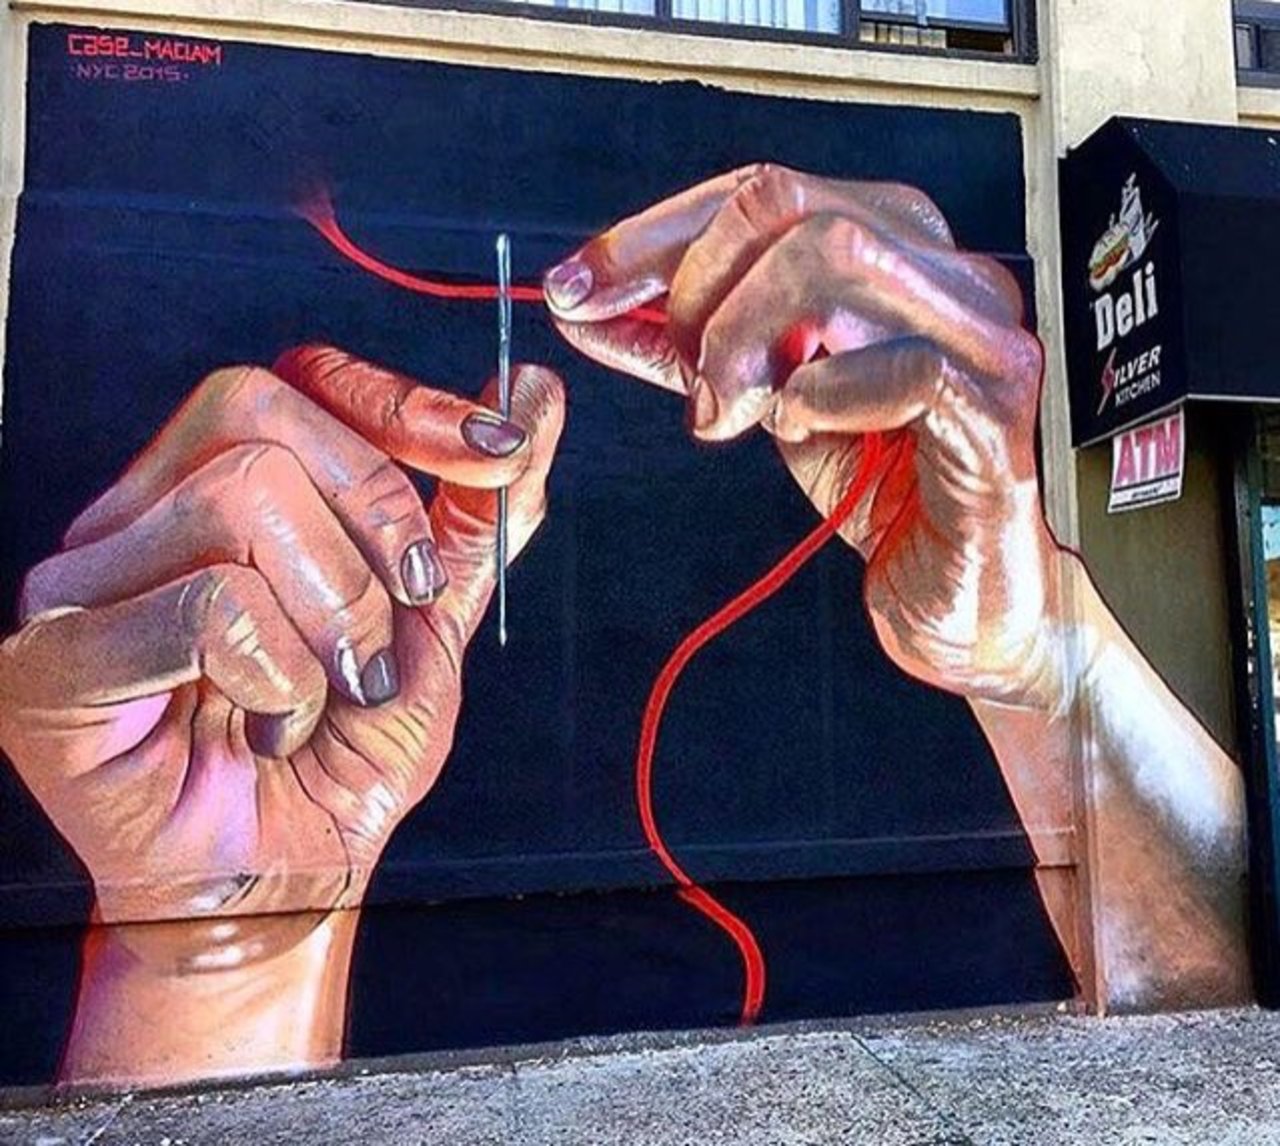 #satvadesignstudio : New Street Art by Case Ma'Claim in NYC 

#art #graffiti #mural #streetart https://t.co/c2Nak4S5tj